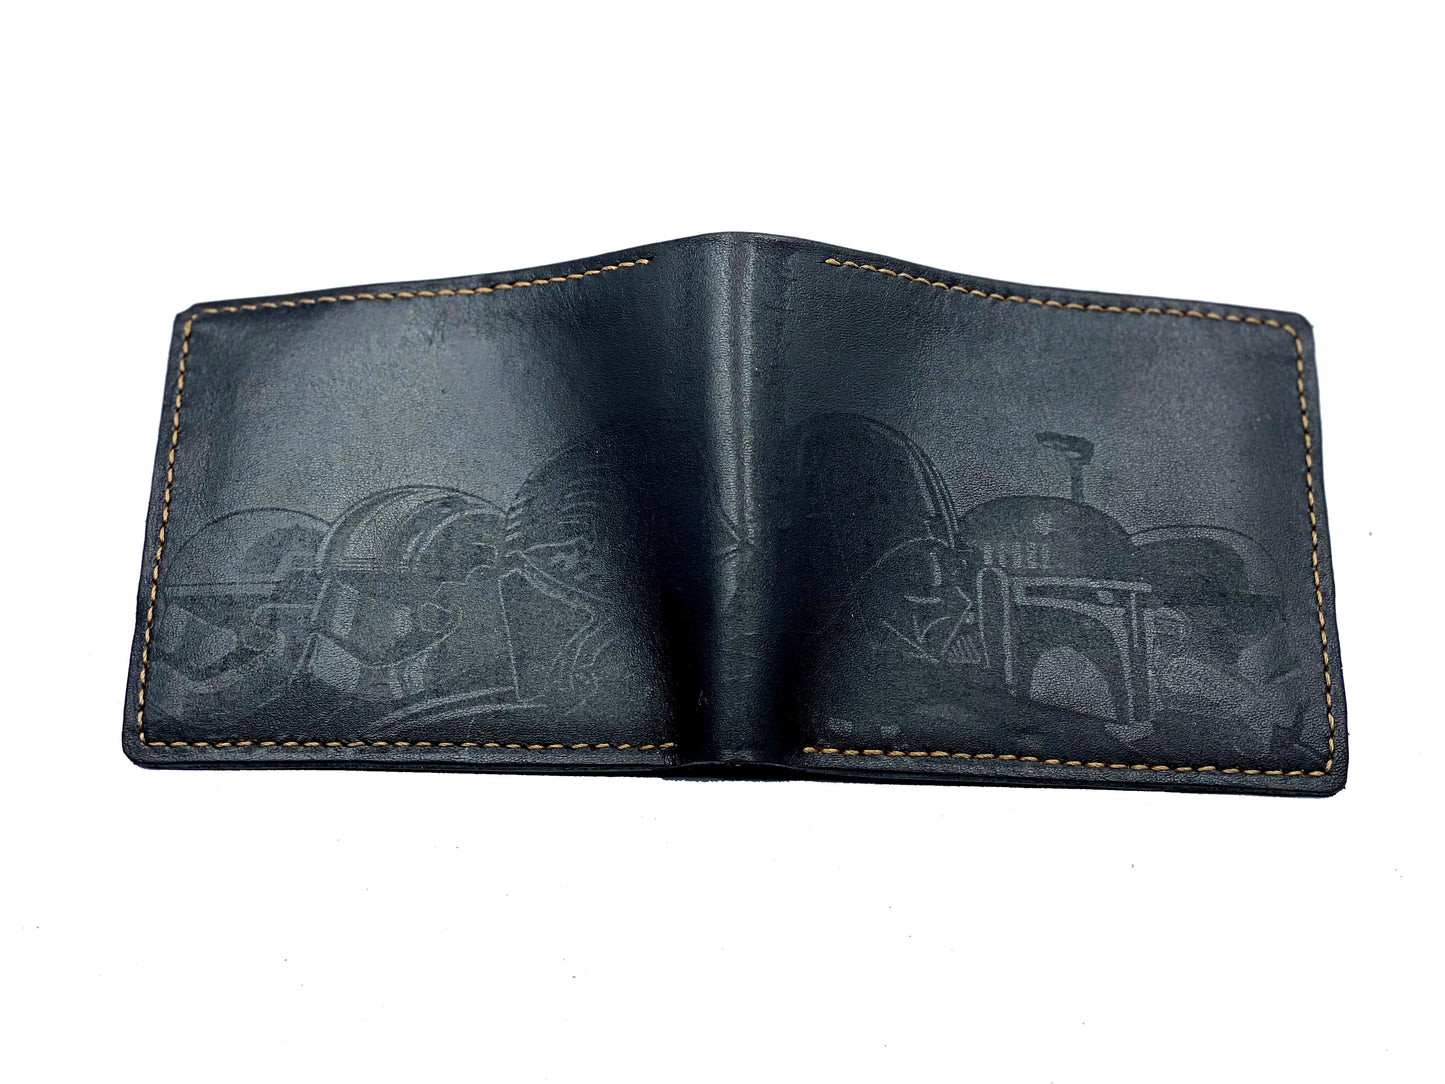 Mayan Corner - Starwars villains dark side personalized leather handmade men's wallet, custom anniversary gifts for him, Father boyfriend brother special present